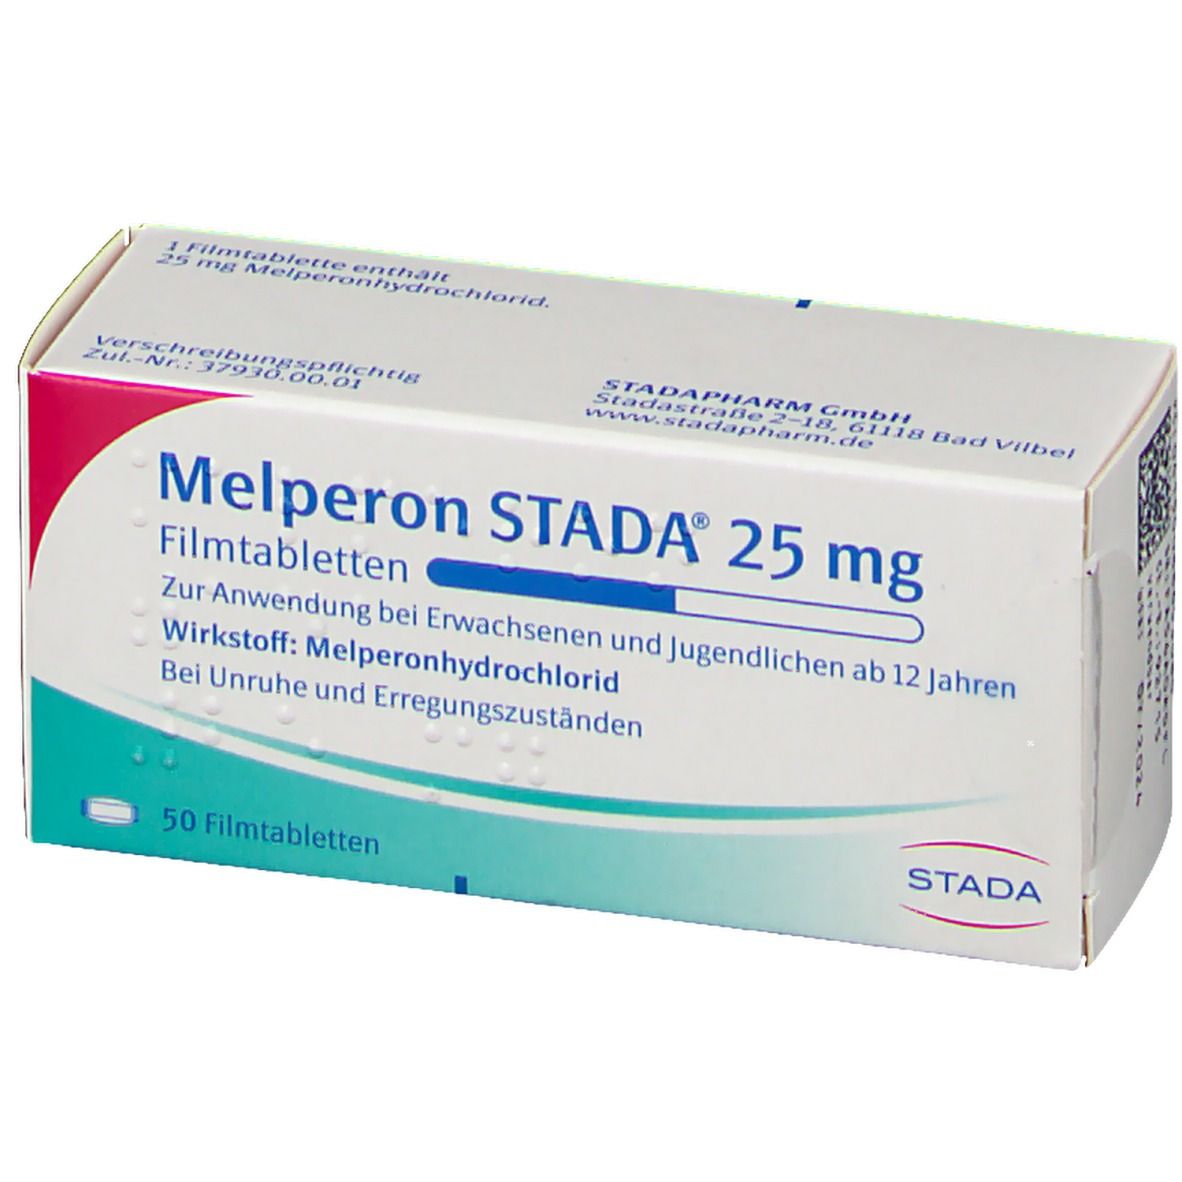 Melperon STADA® 25 mg